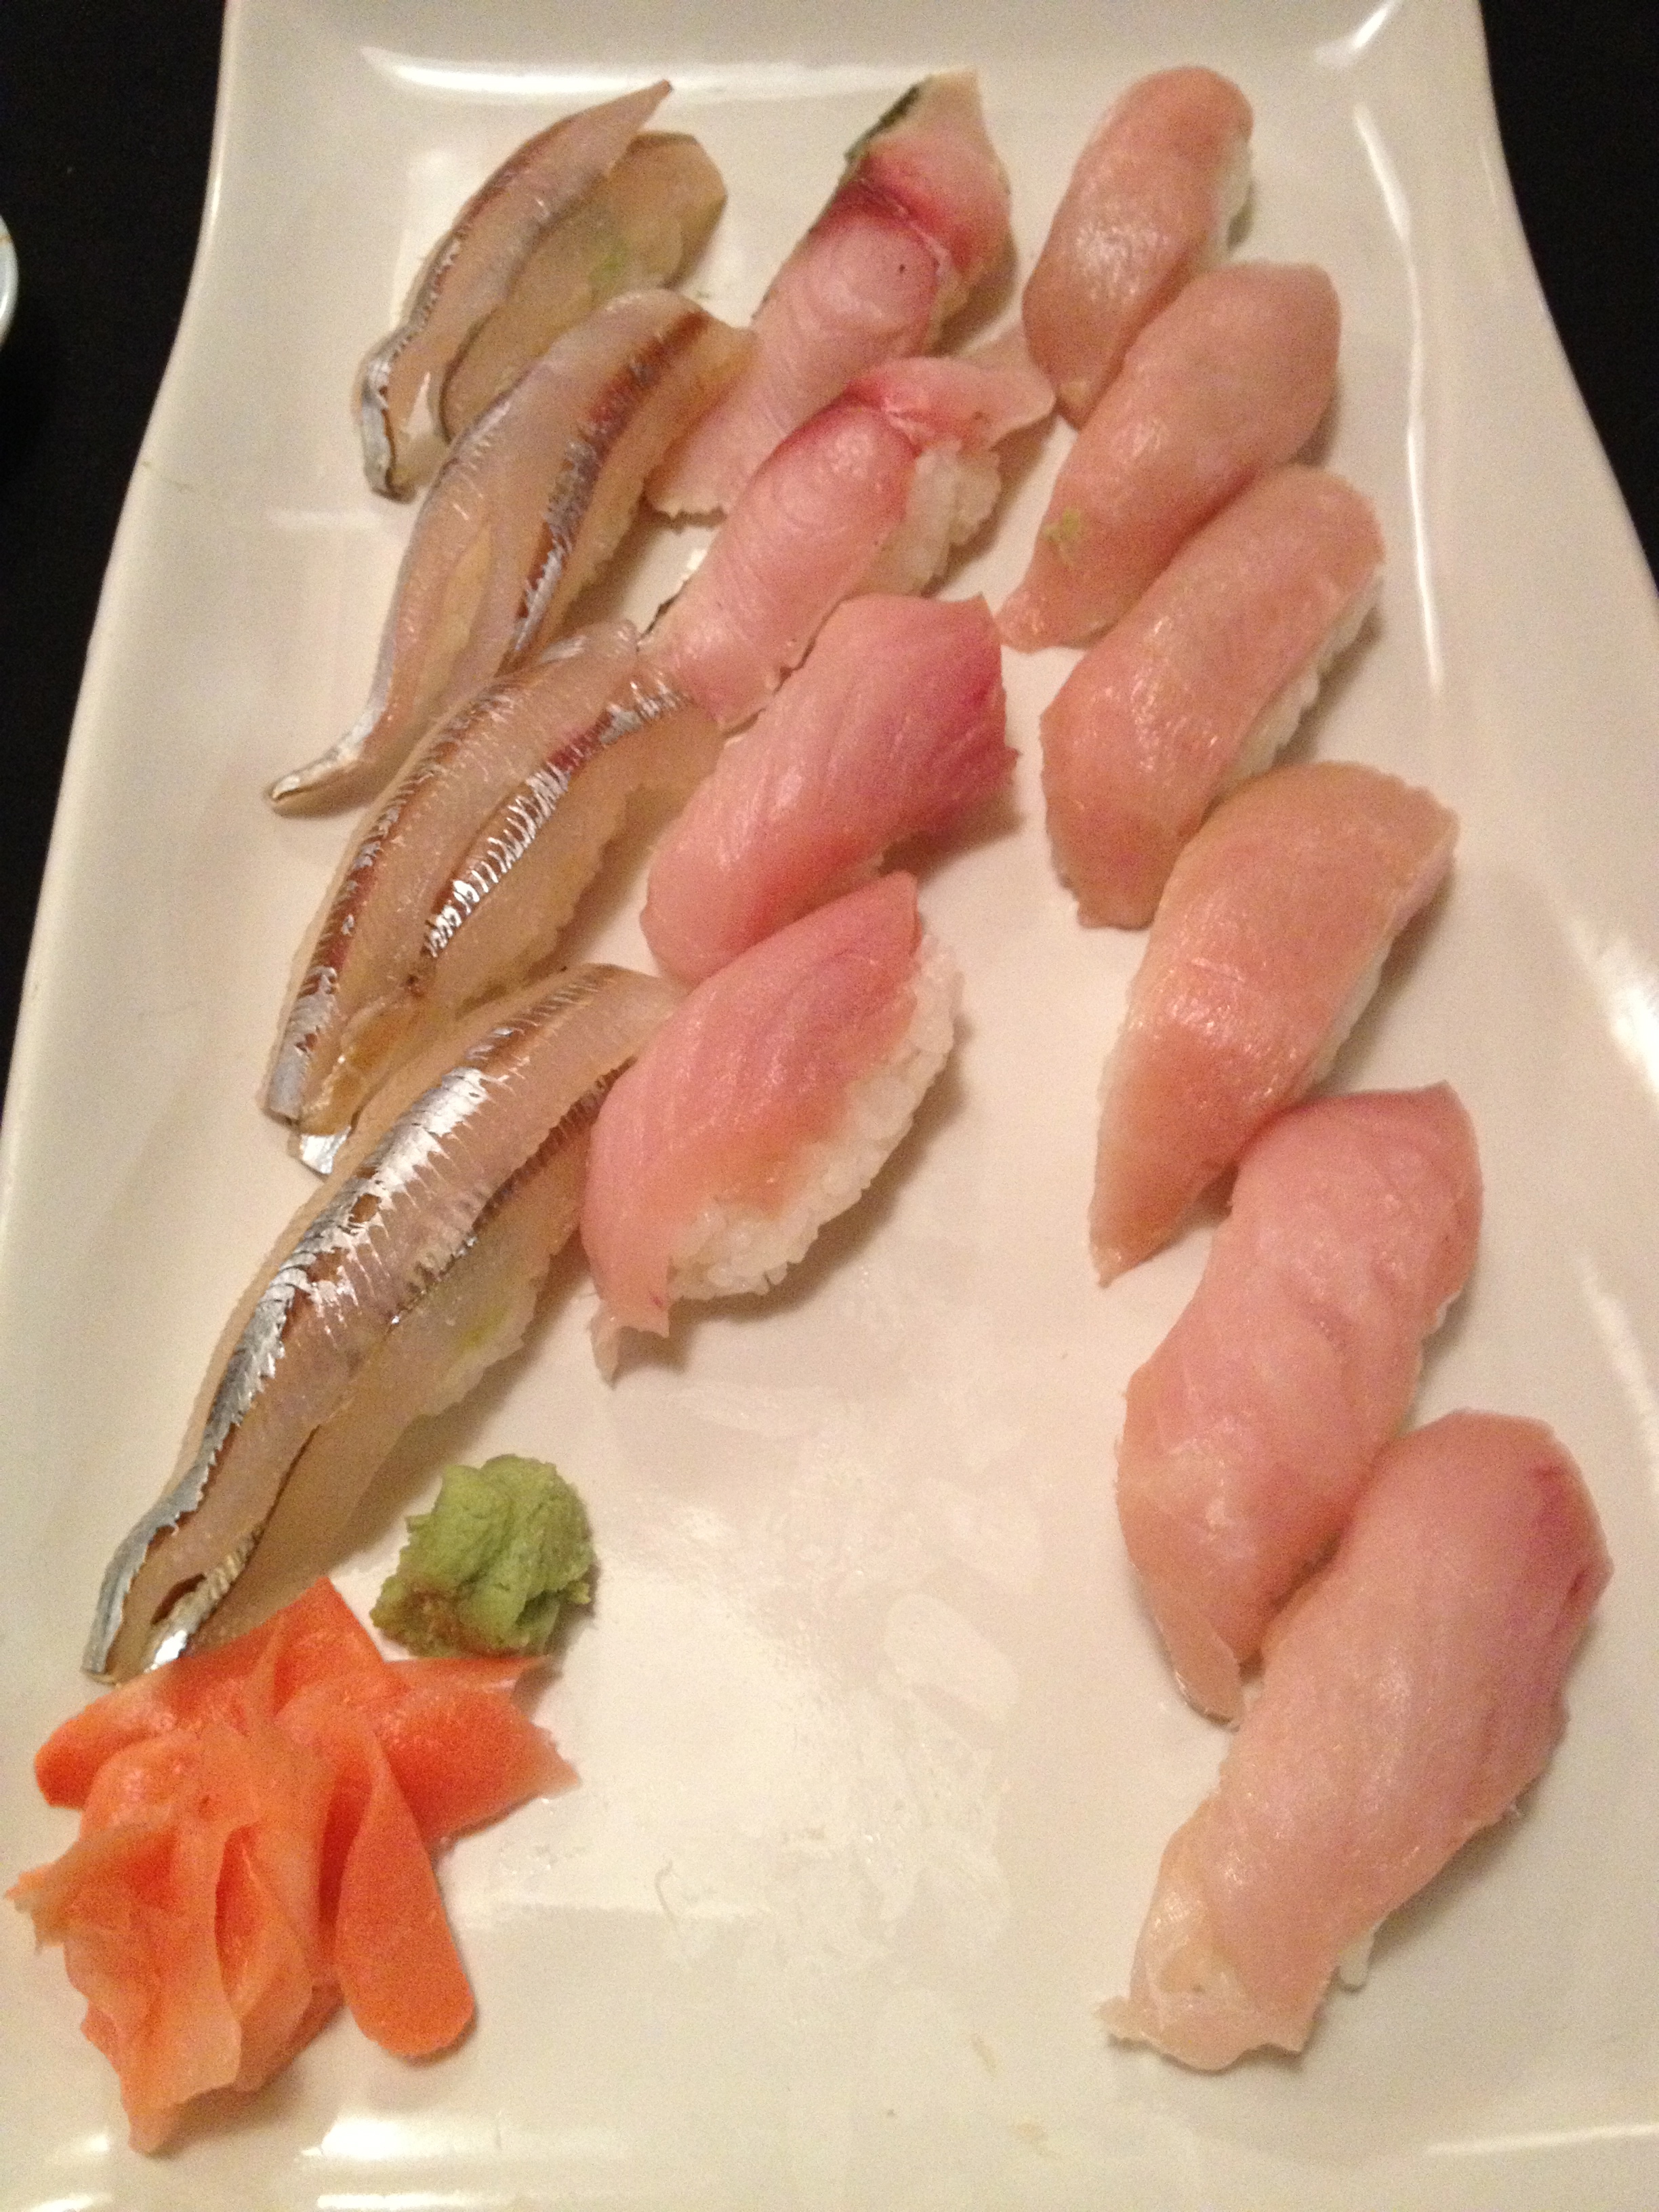 The sushi platter